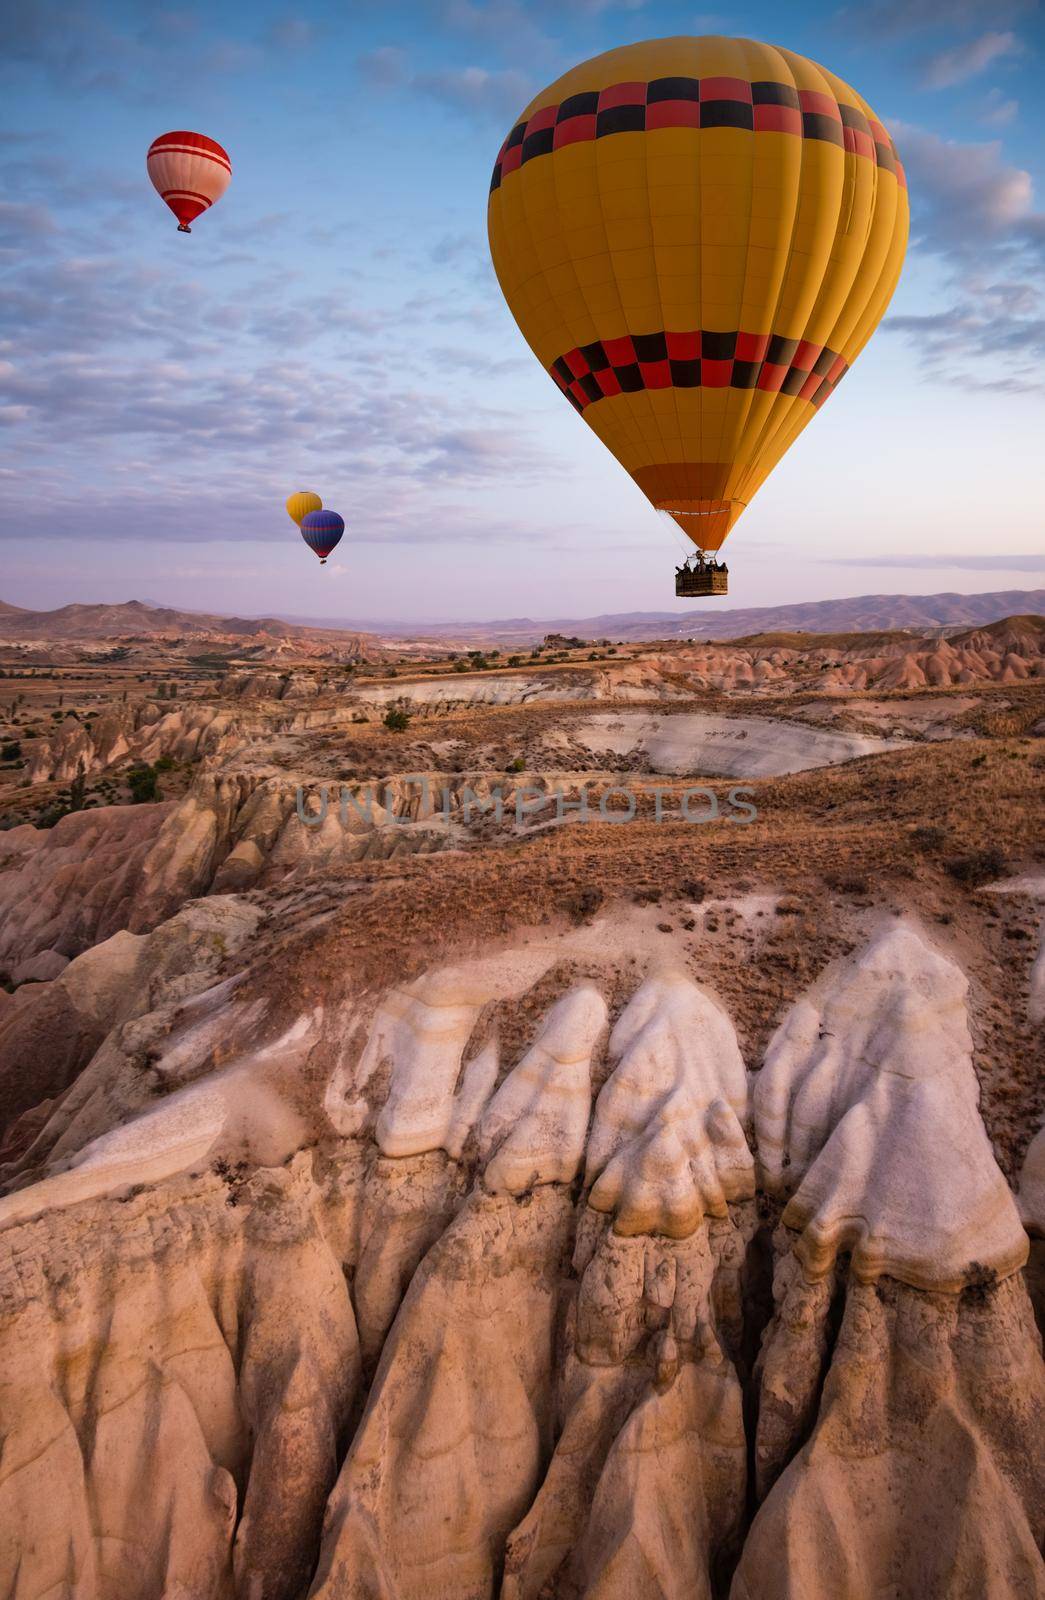 Hot air balloon festival in Cappadocia, Turkey by GekaSkr